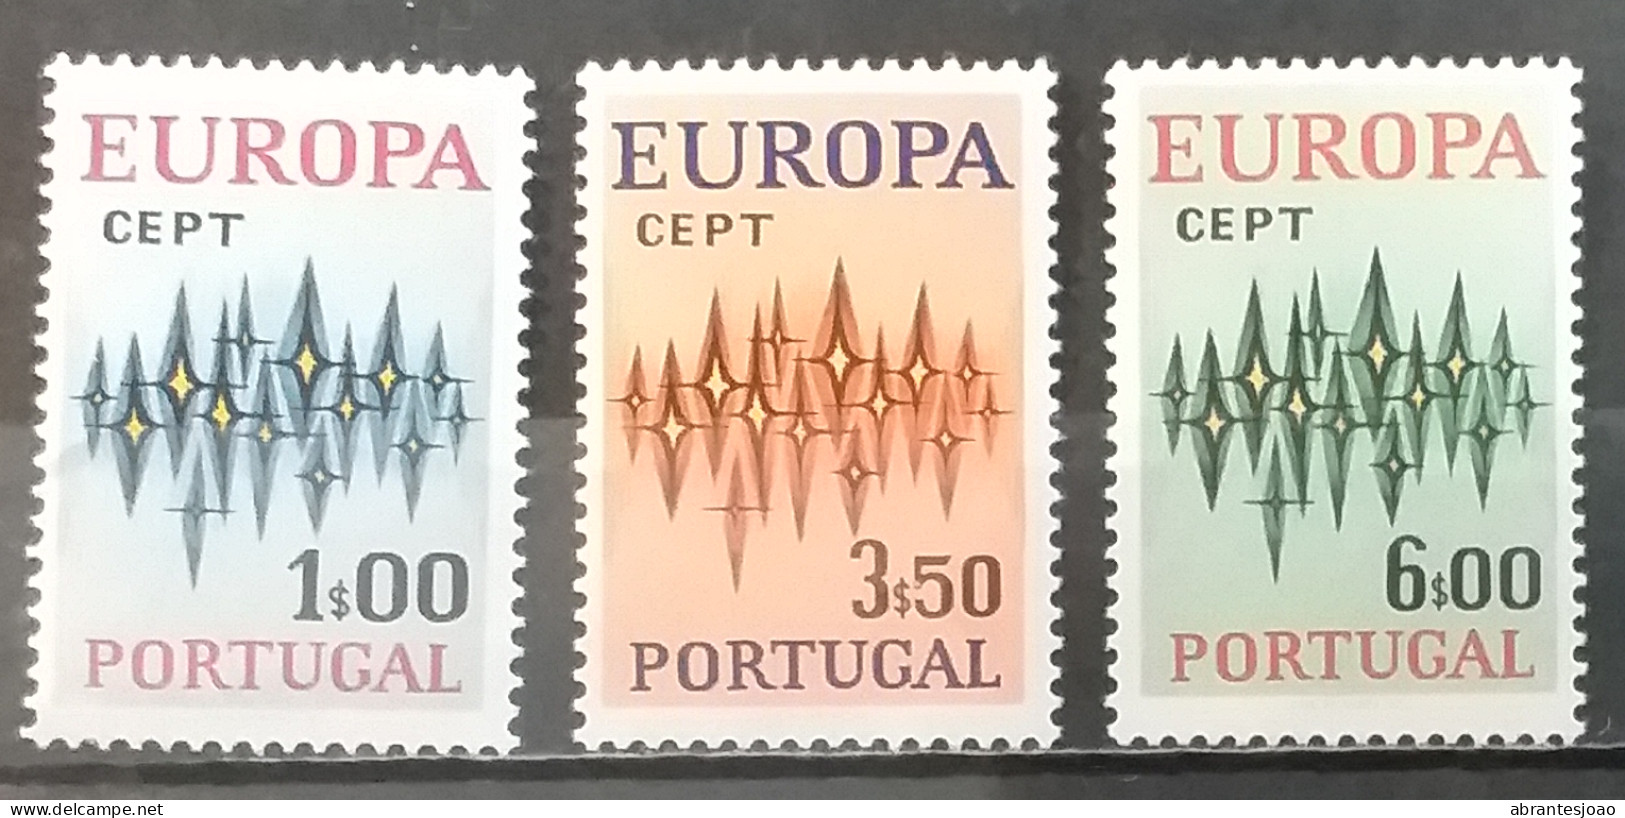 Portugal - Europa CEPT -1961+1963+1968+1971+1972 - MNH - 3+3+3+3+3 Stamps - SALE!!! - Ungebraucht